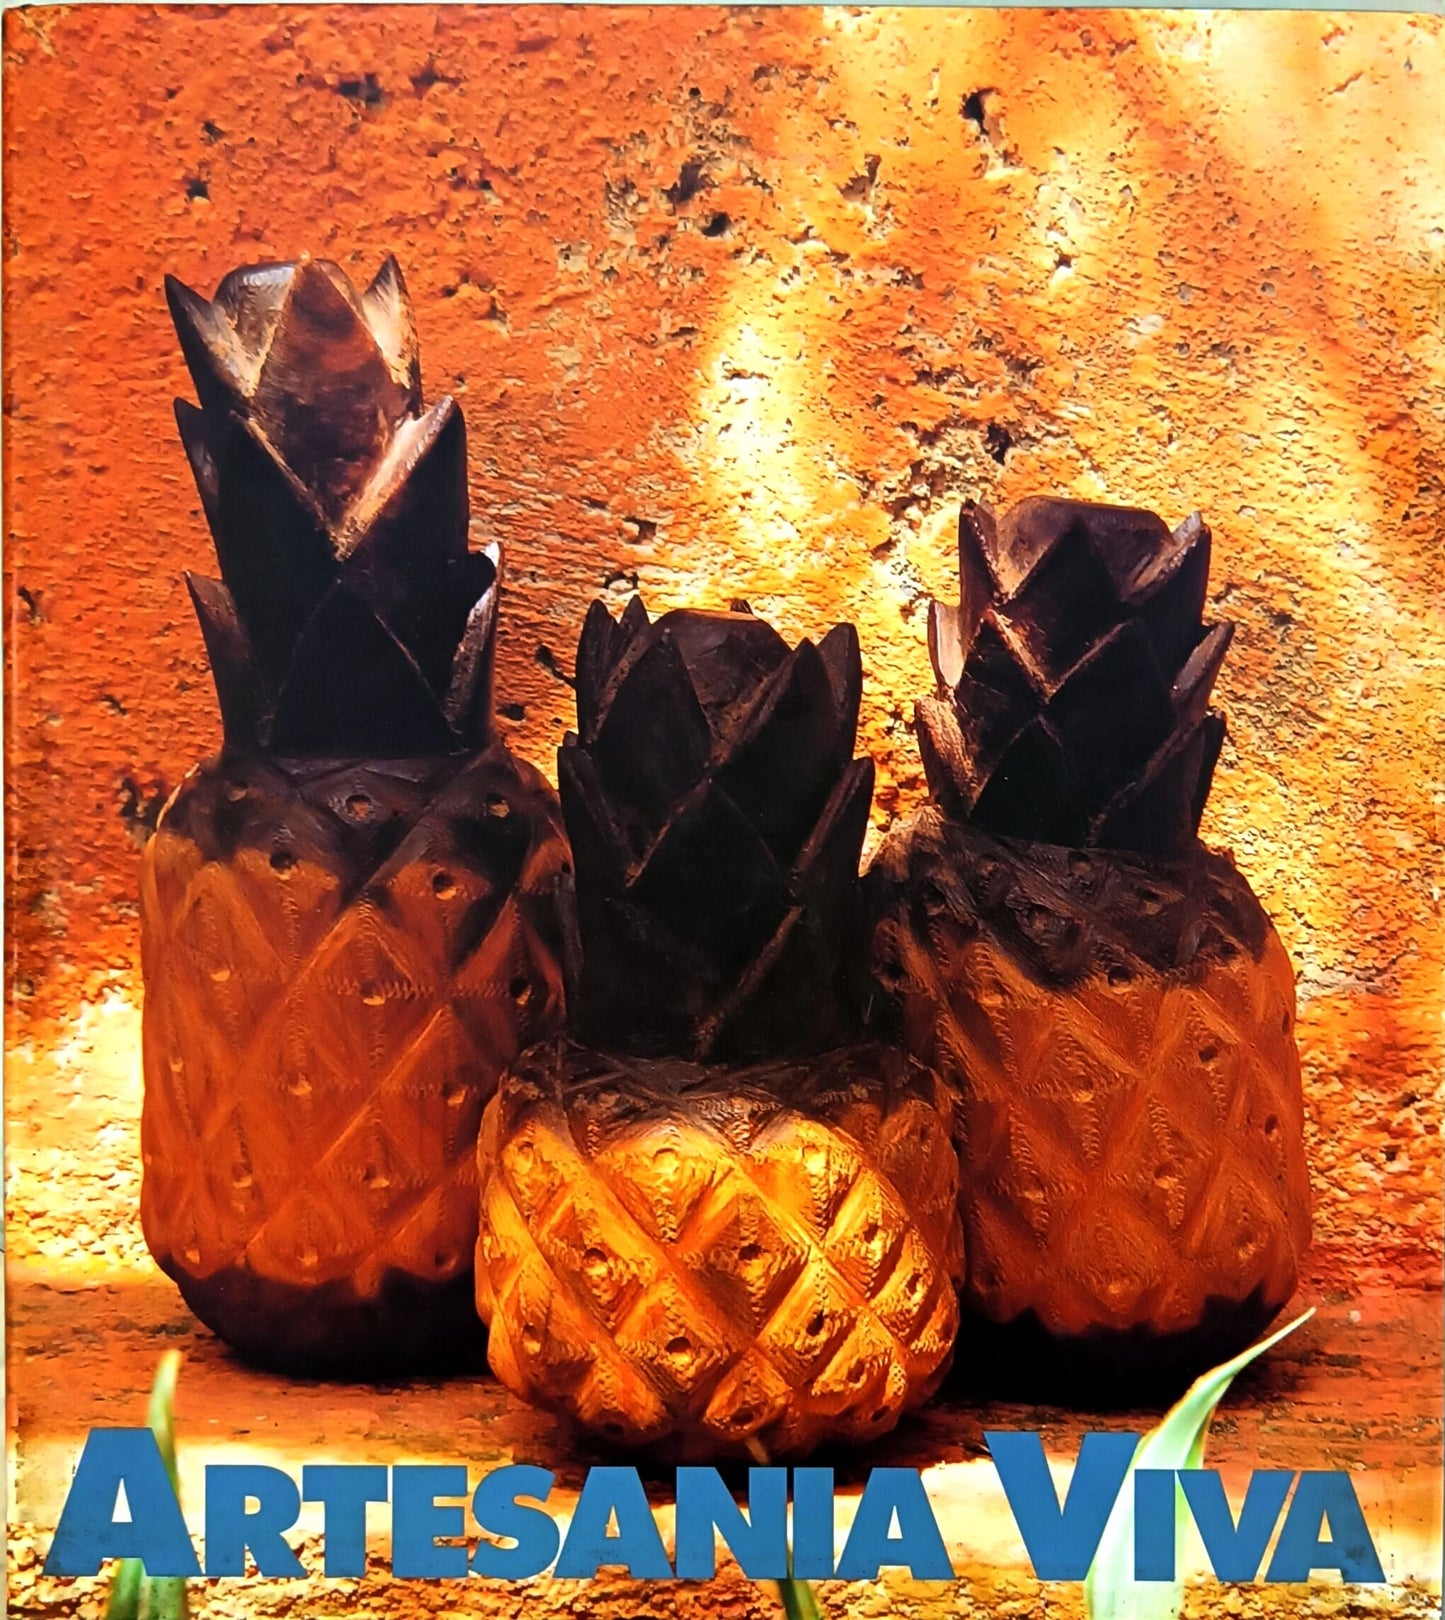 Artesanía Viva